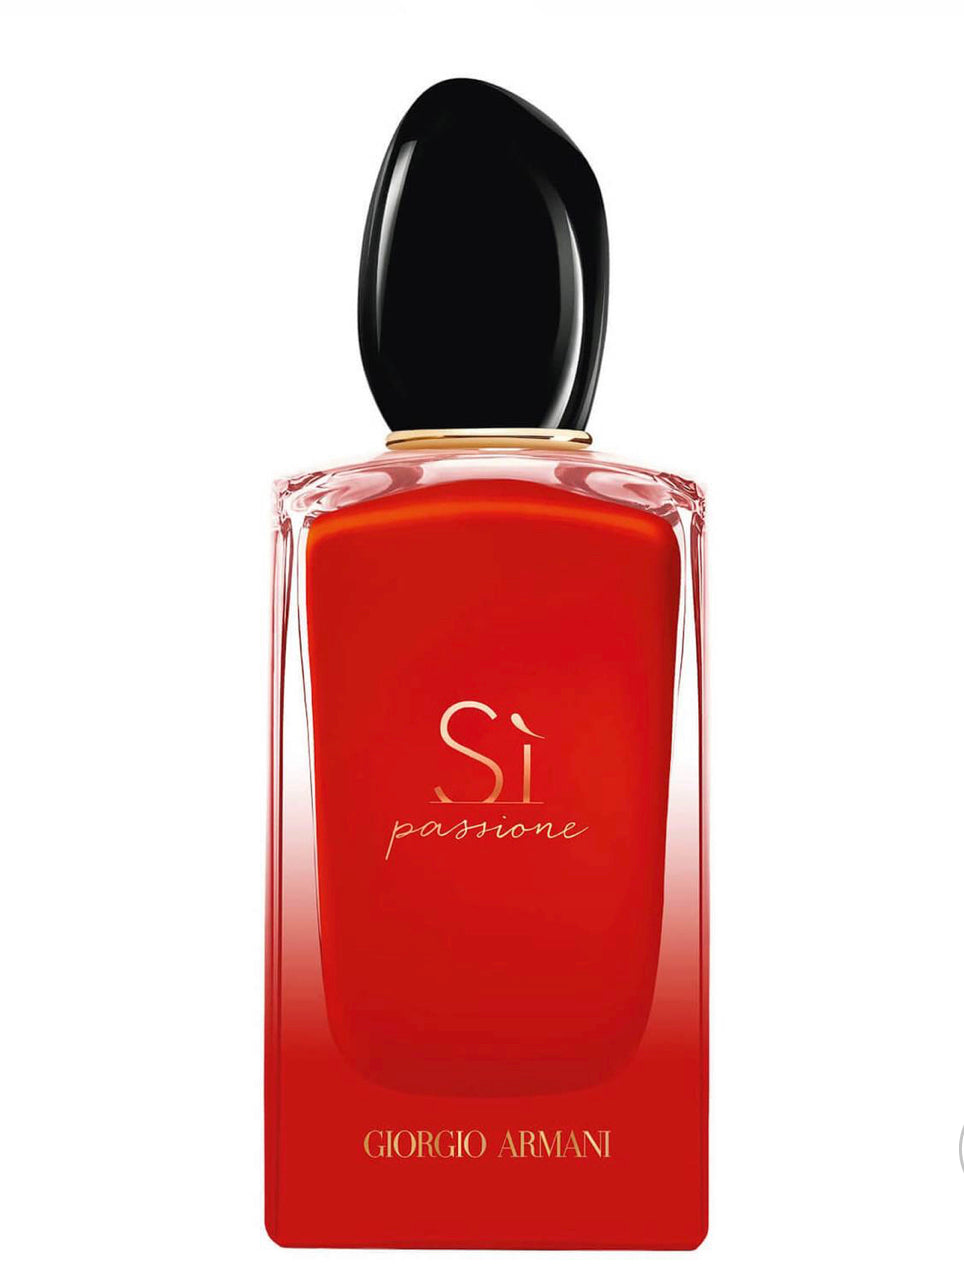 Giorgio Armani Passione Intense Eau De Parfum Samples – The Perfume Sample Shop